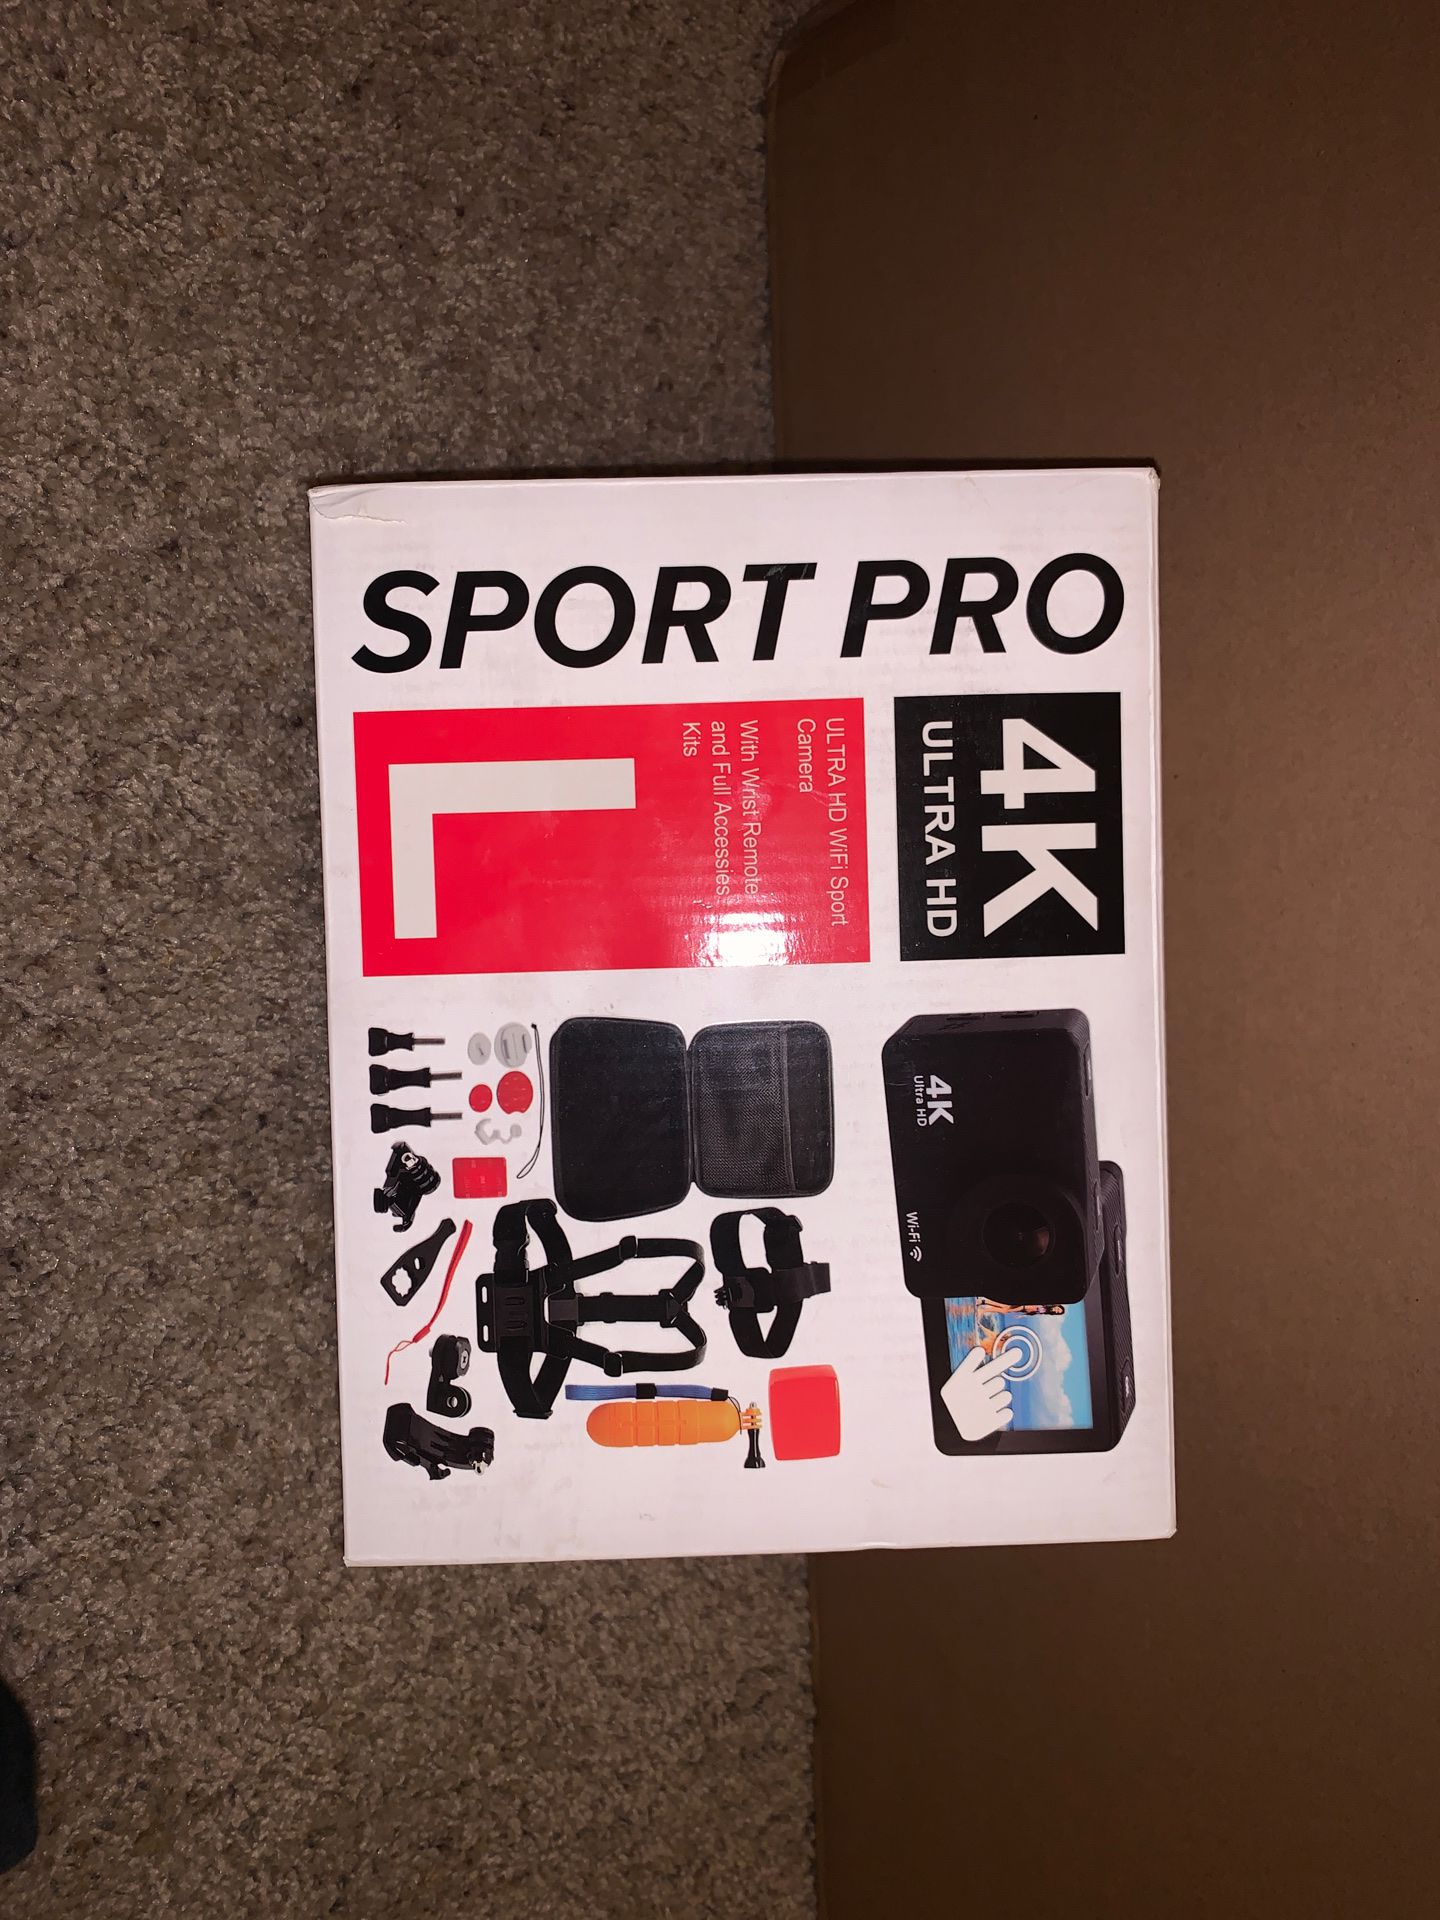 Sport pro action camera 4K